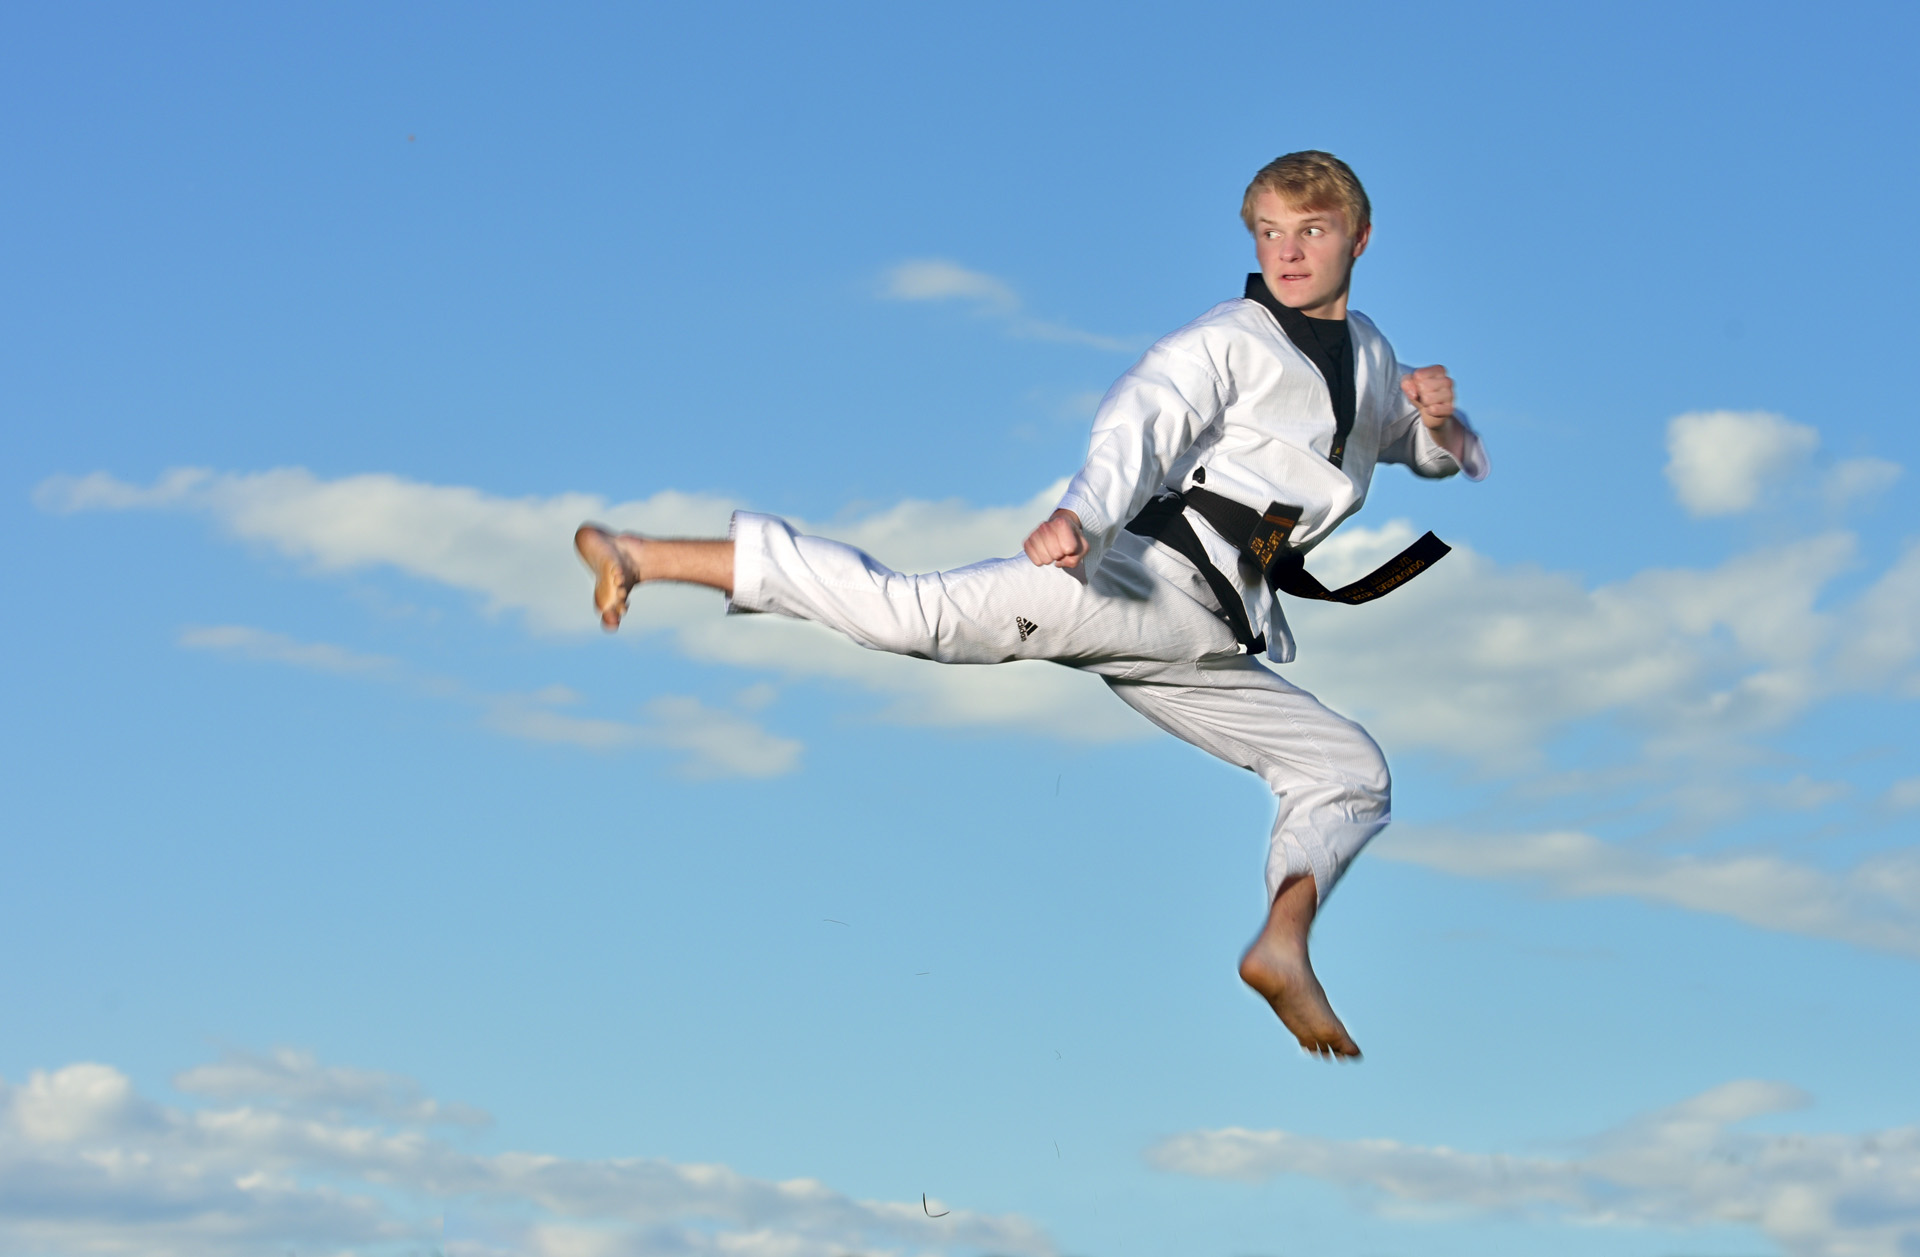 Troy High School student shows off his taekwondo skills on a hilltop in Birmingham, Michigan for a dynamic, powerful senior photo.